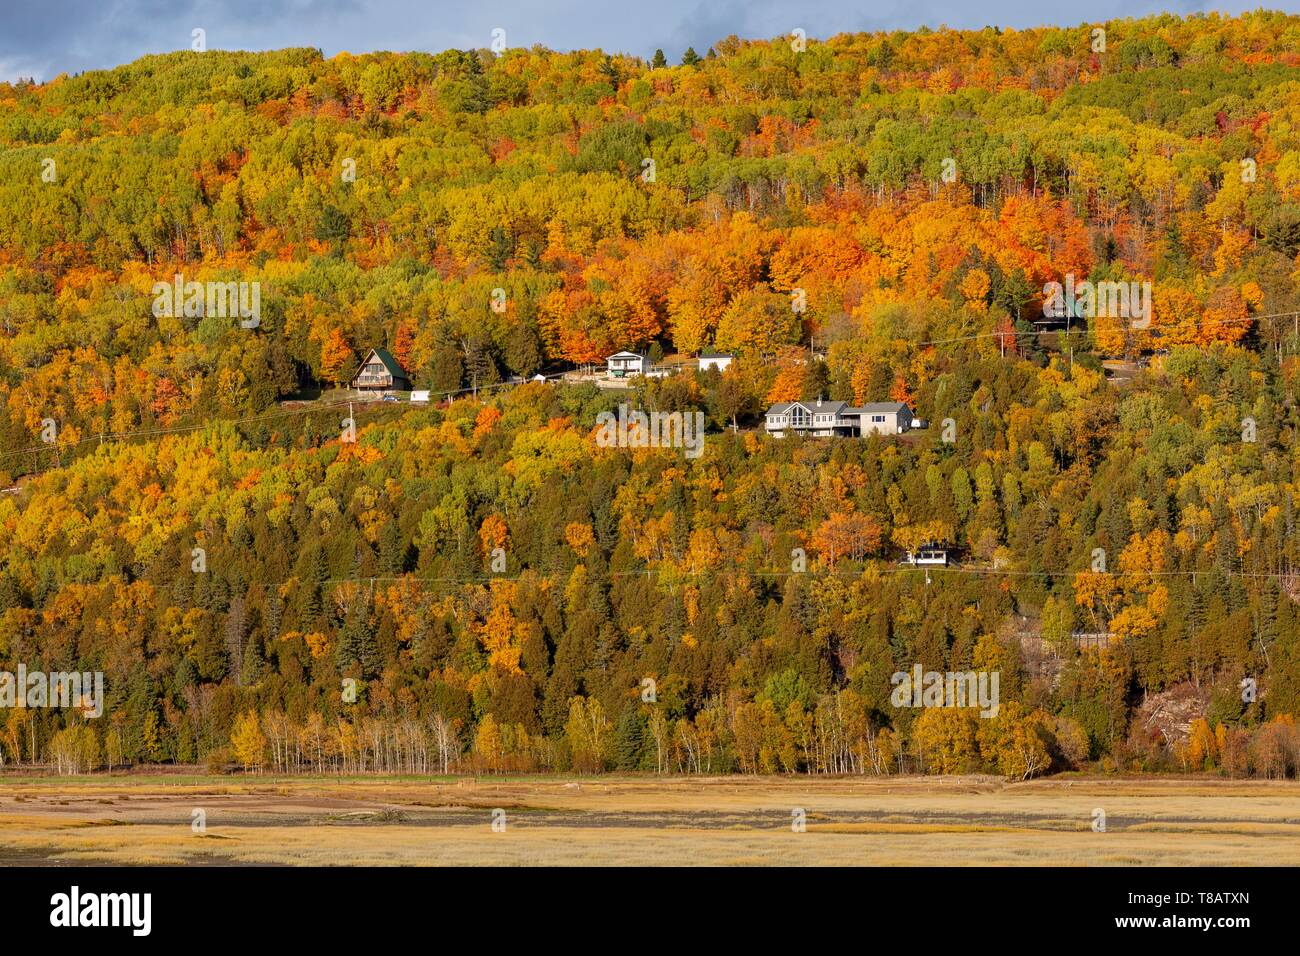 Kanada, Provinz Quebec, Charlevoix Region, Baie-Saint-Paul, der gouffre Fluss Nebenfluss des linken Ufer des St. Lawrence River bei Ebbe Stockfoto